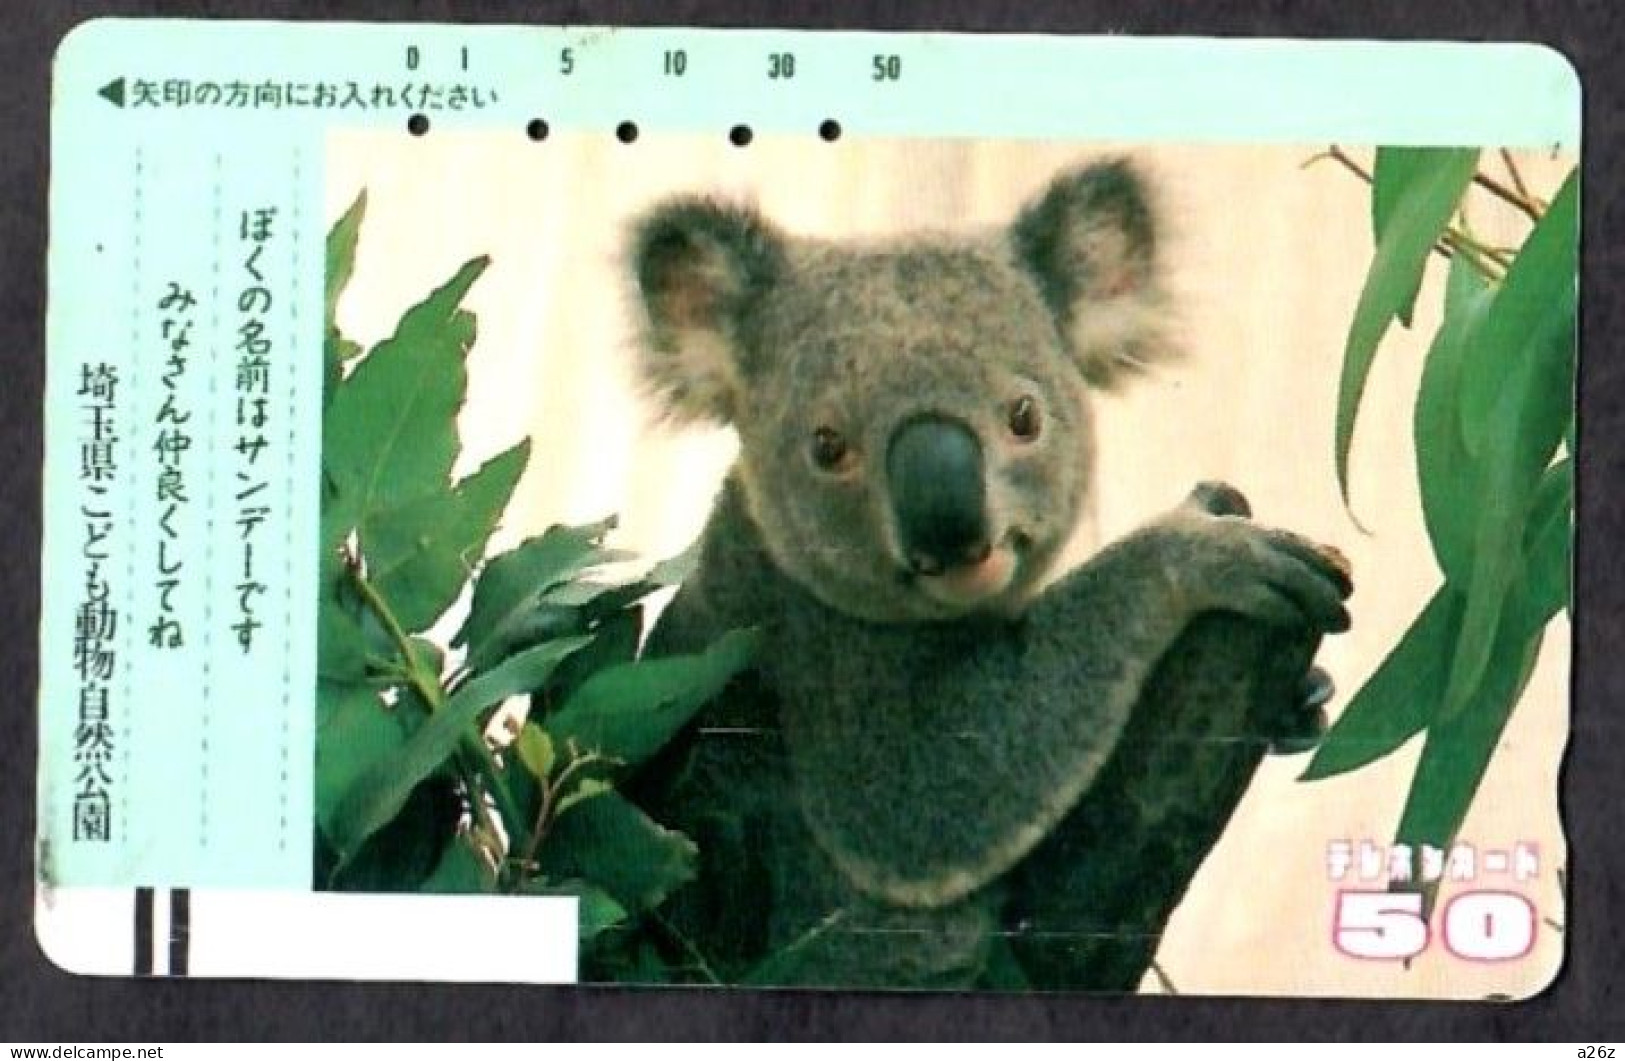 Japan 1V Koala Saitama Zoo Used Card - Oerwoud